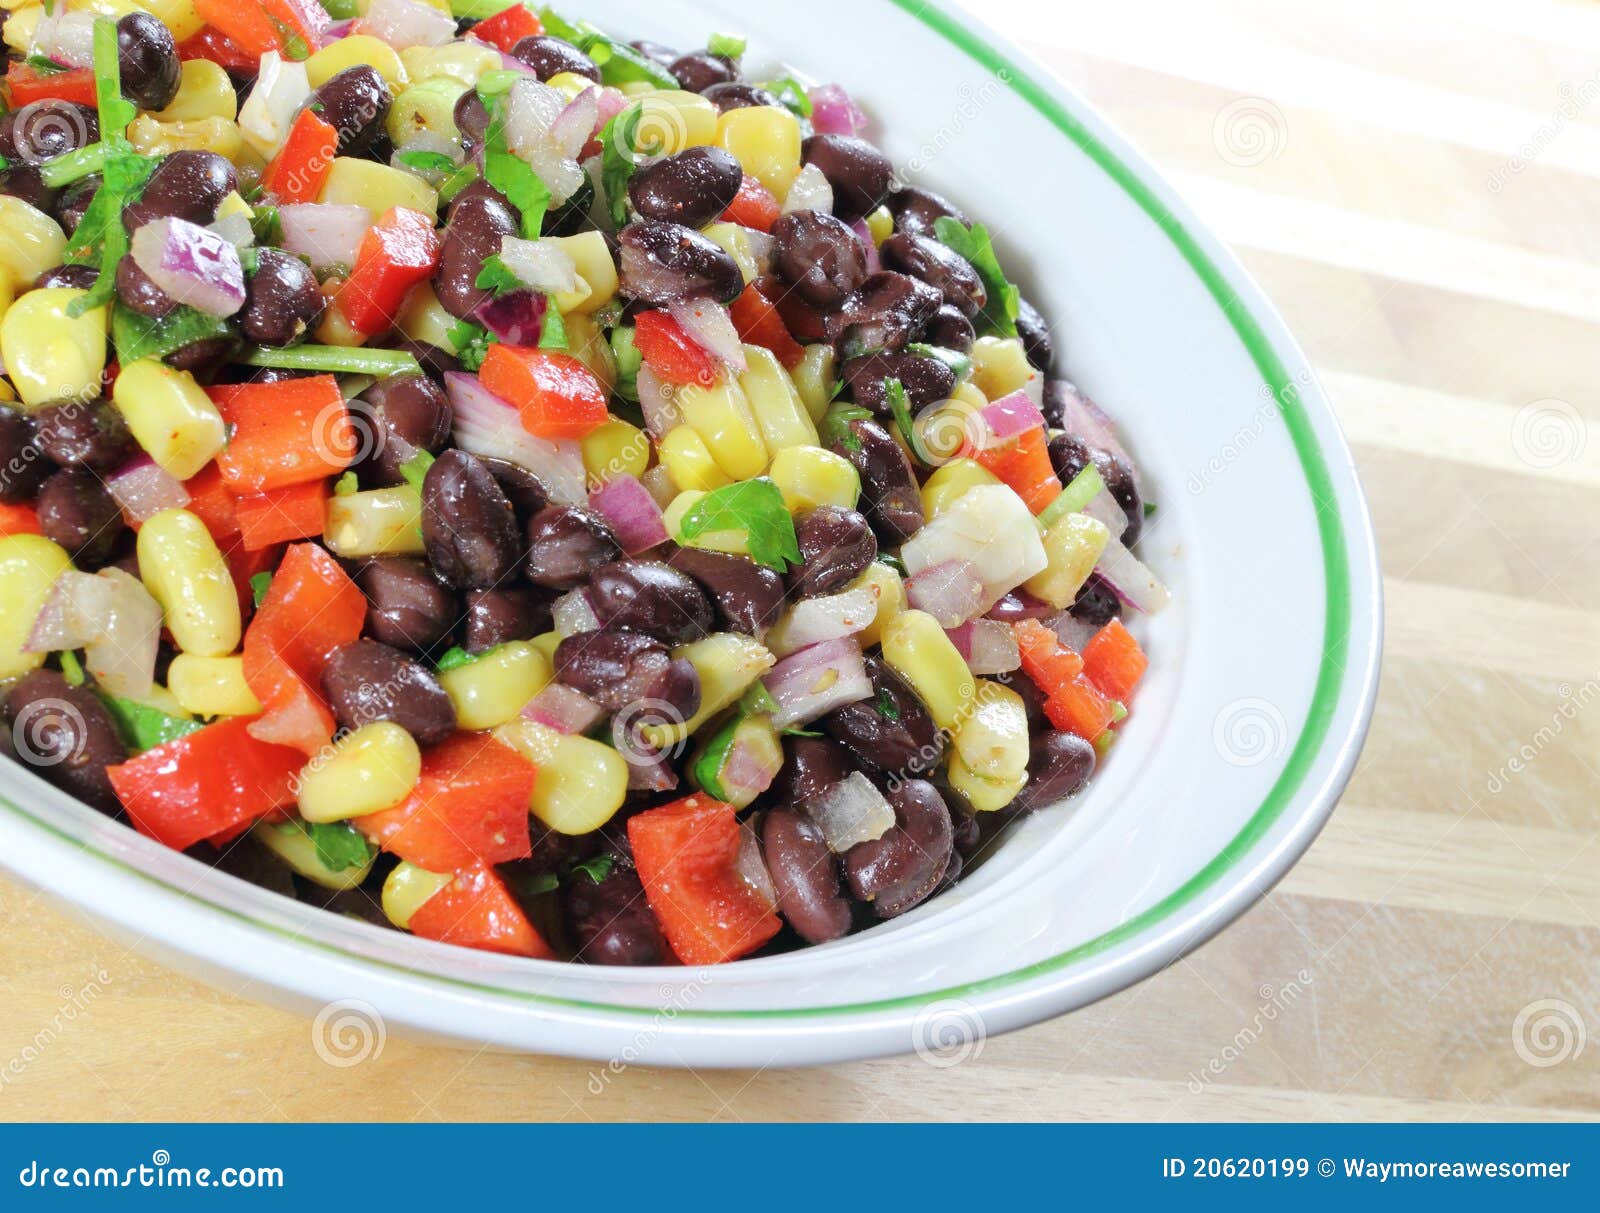 southwest black bean salad